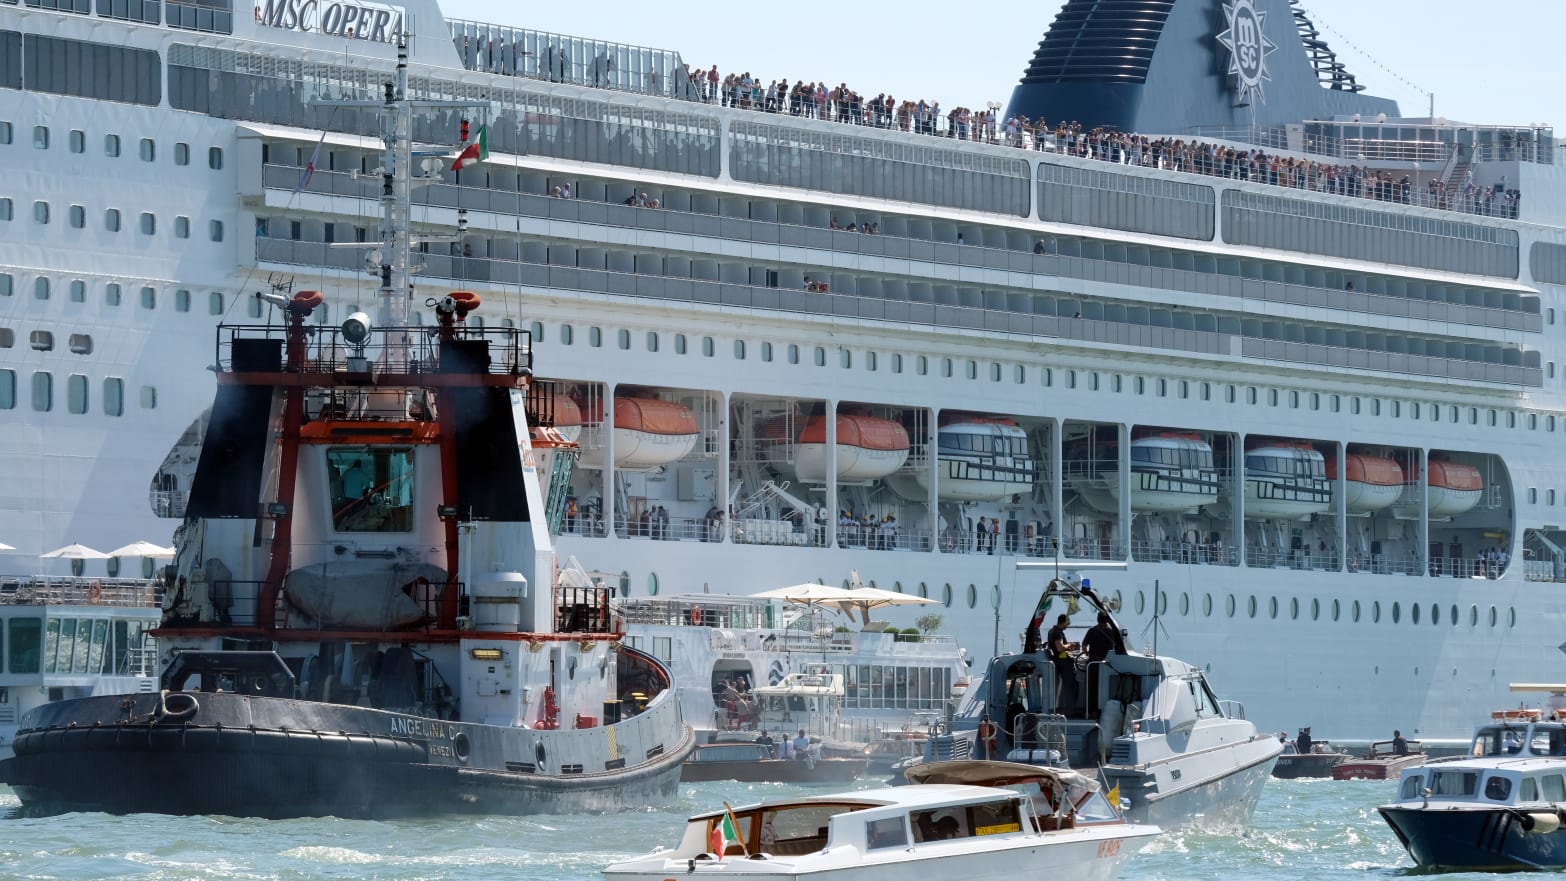 msc cruise ship sinks